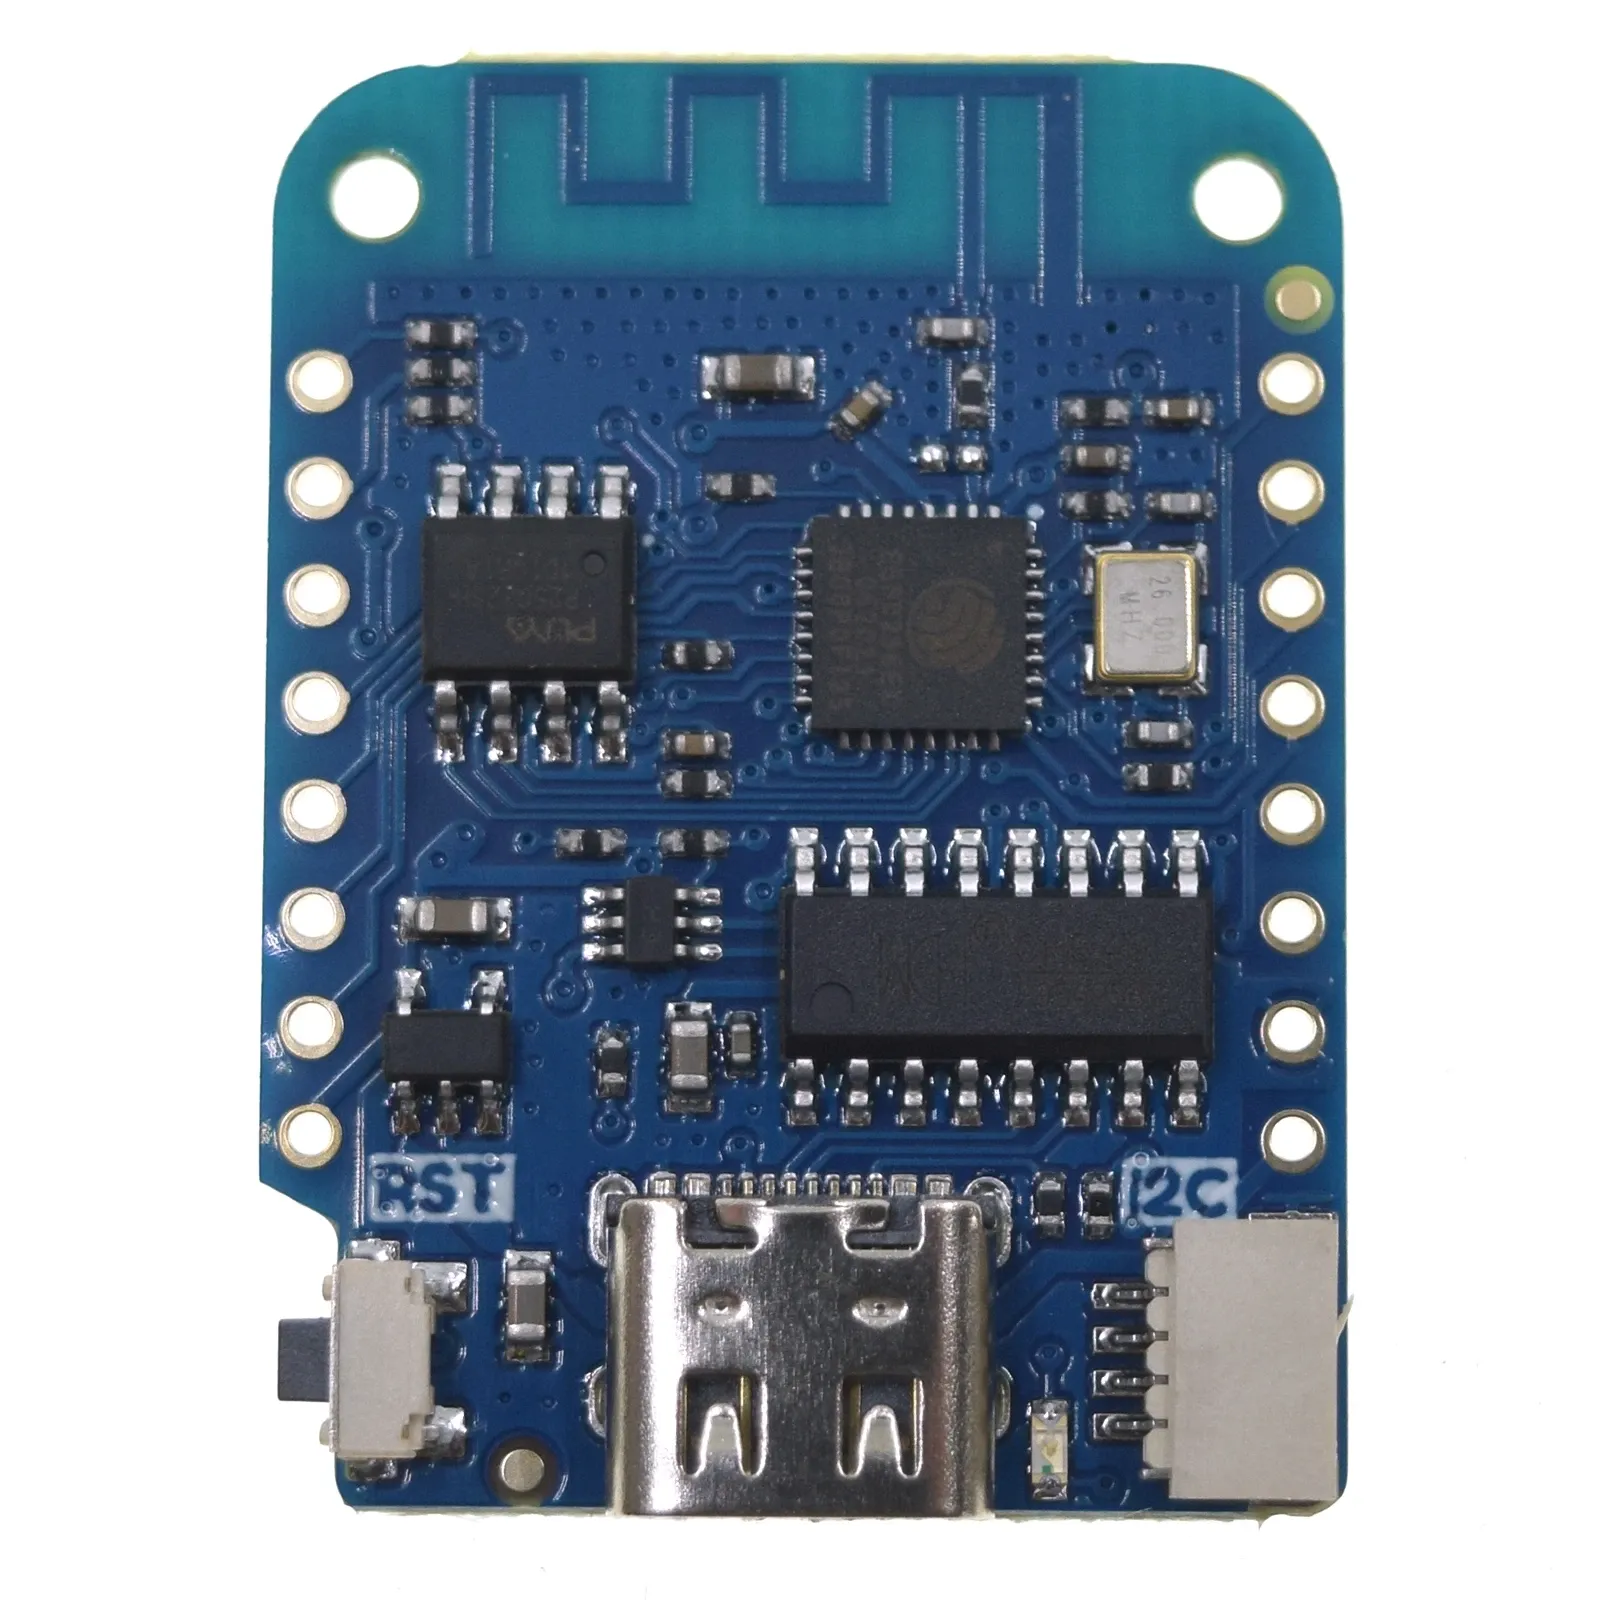 LOLIN D1 Mini V4.0.0 - WEMOS WIFI Internet of Things Board based ESP8266 4MB MicroPython Nodemcu Arduino Compatible